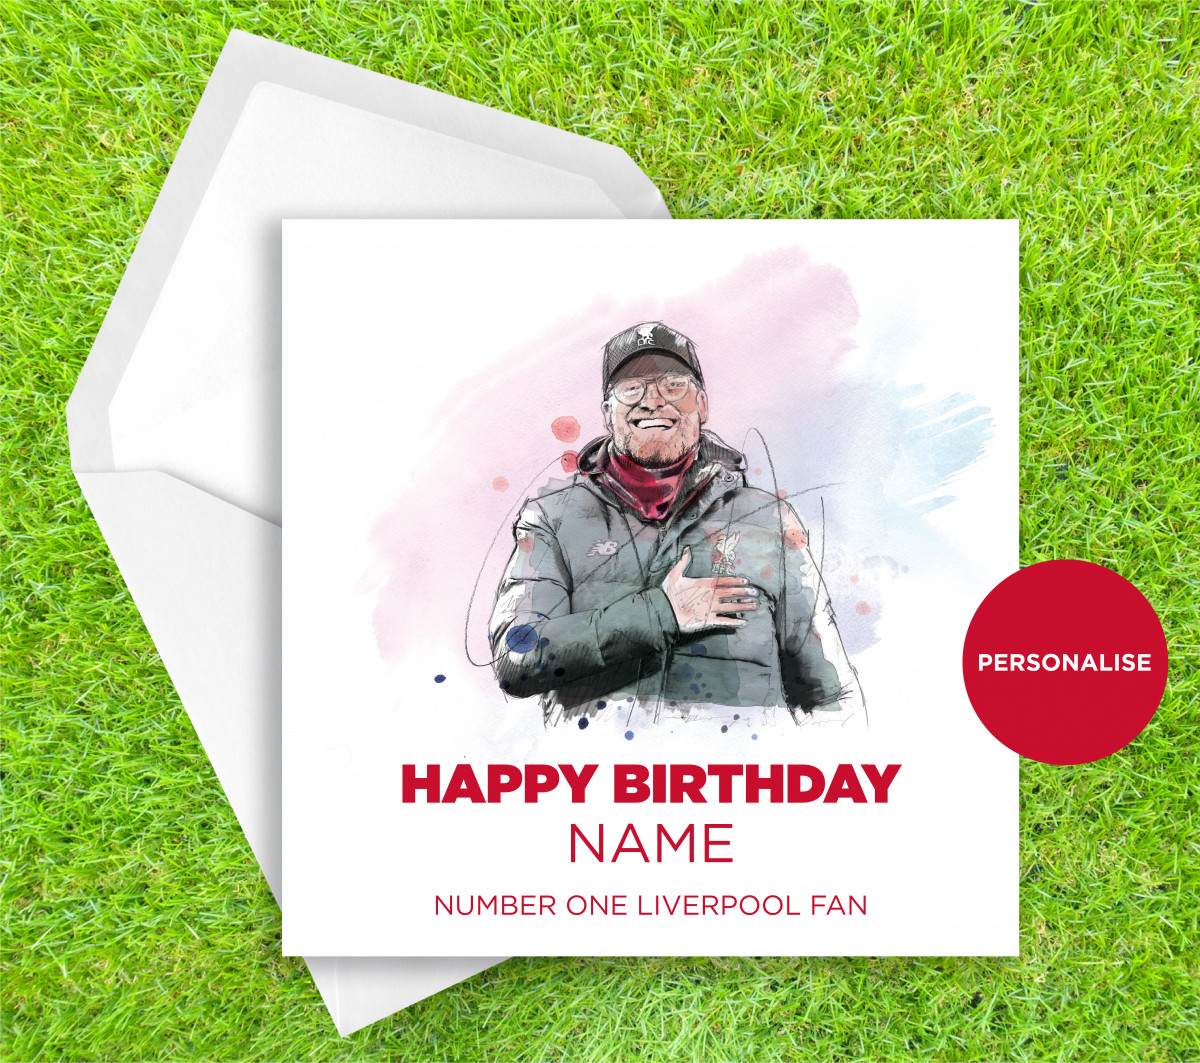 Liverpool FC, Jurgen Klopp, personalised birthday card